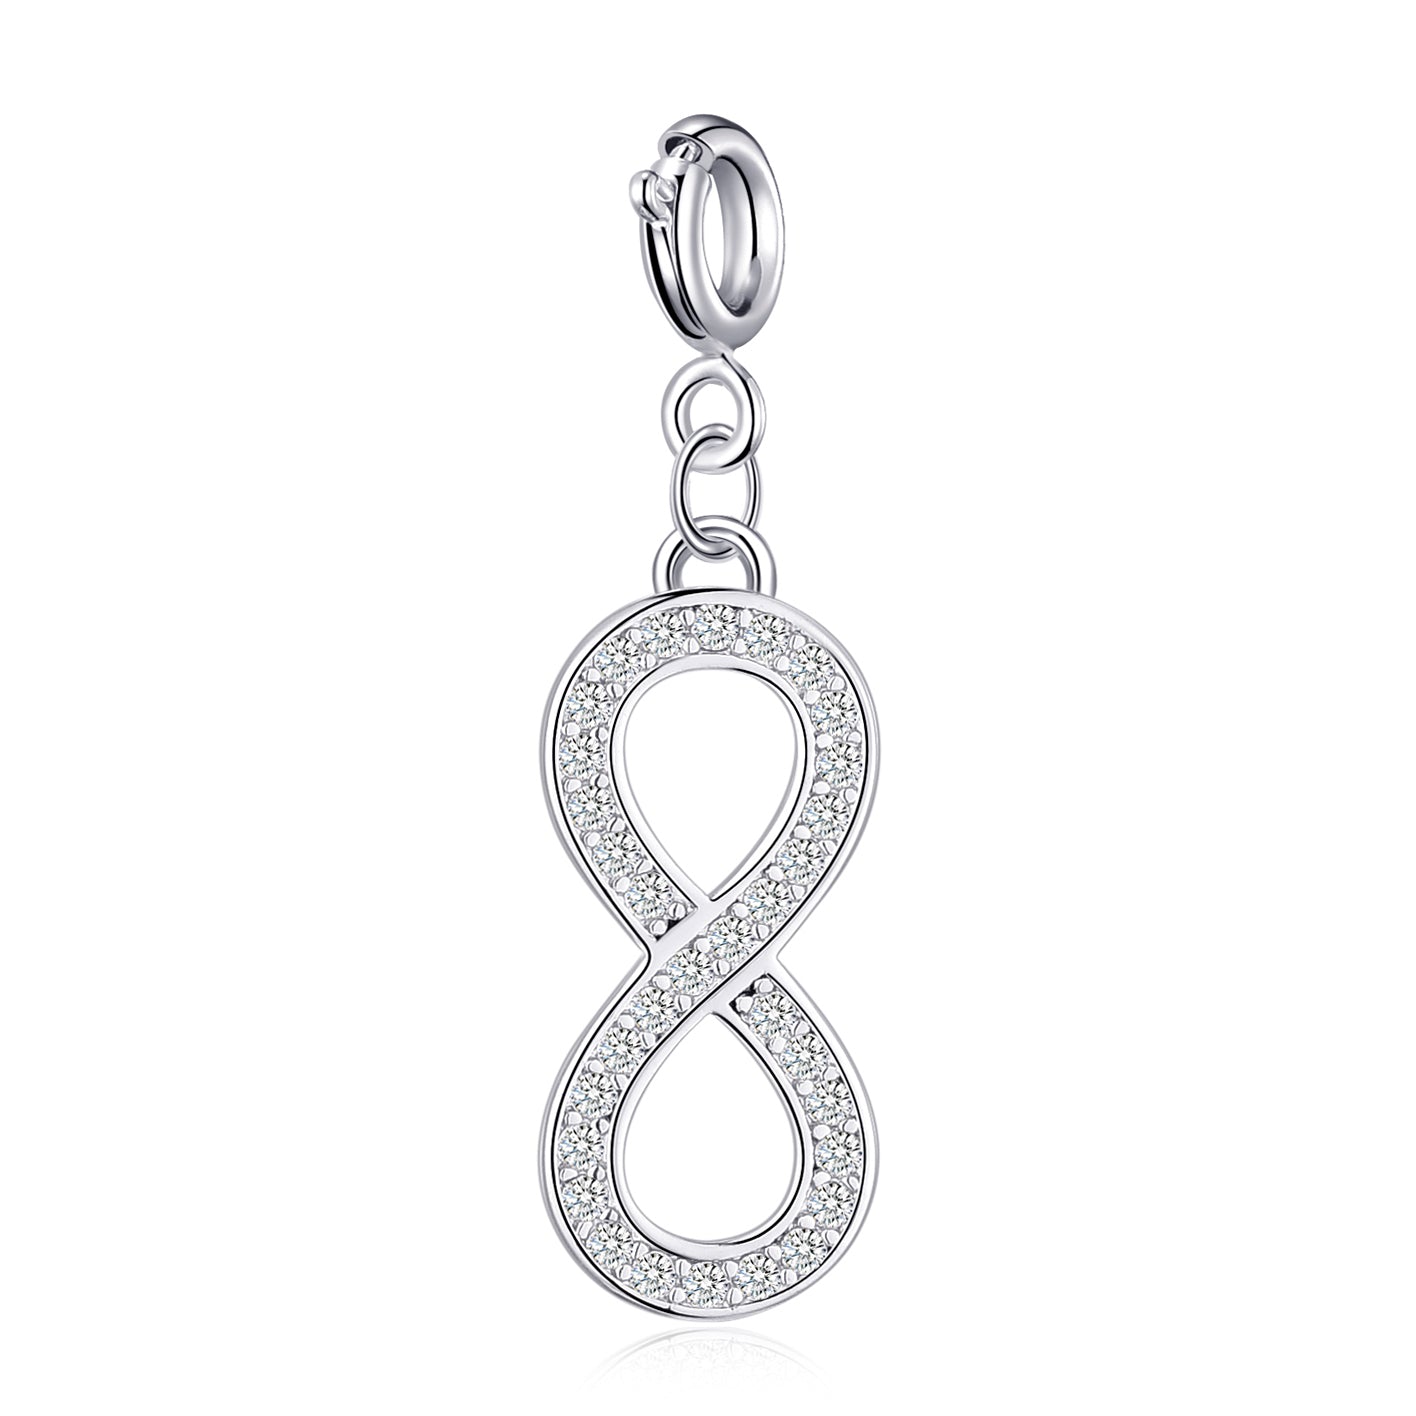 Infinity Charm Created with Zircondia® Crystals by Philip Jones Jewellery